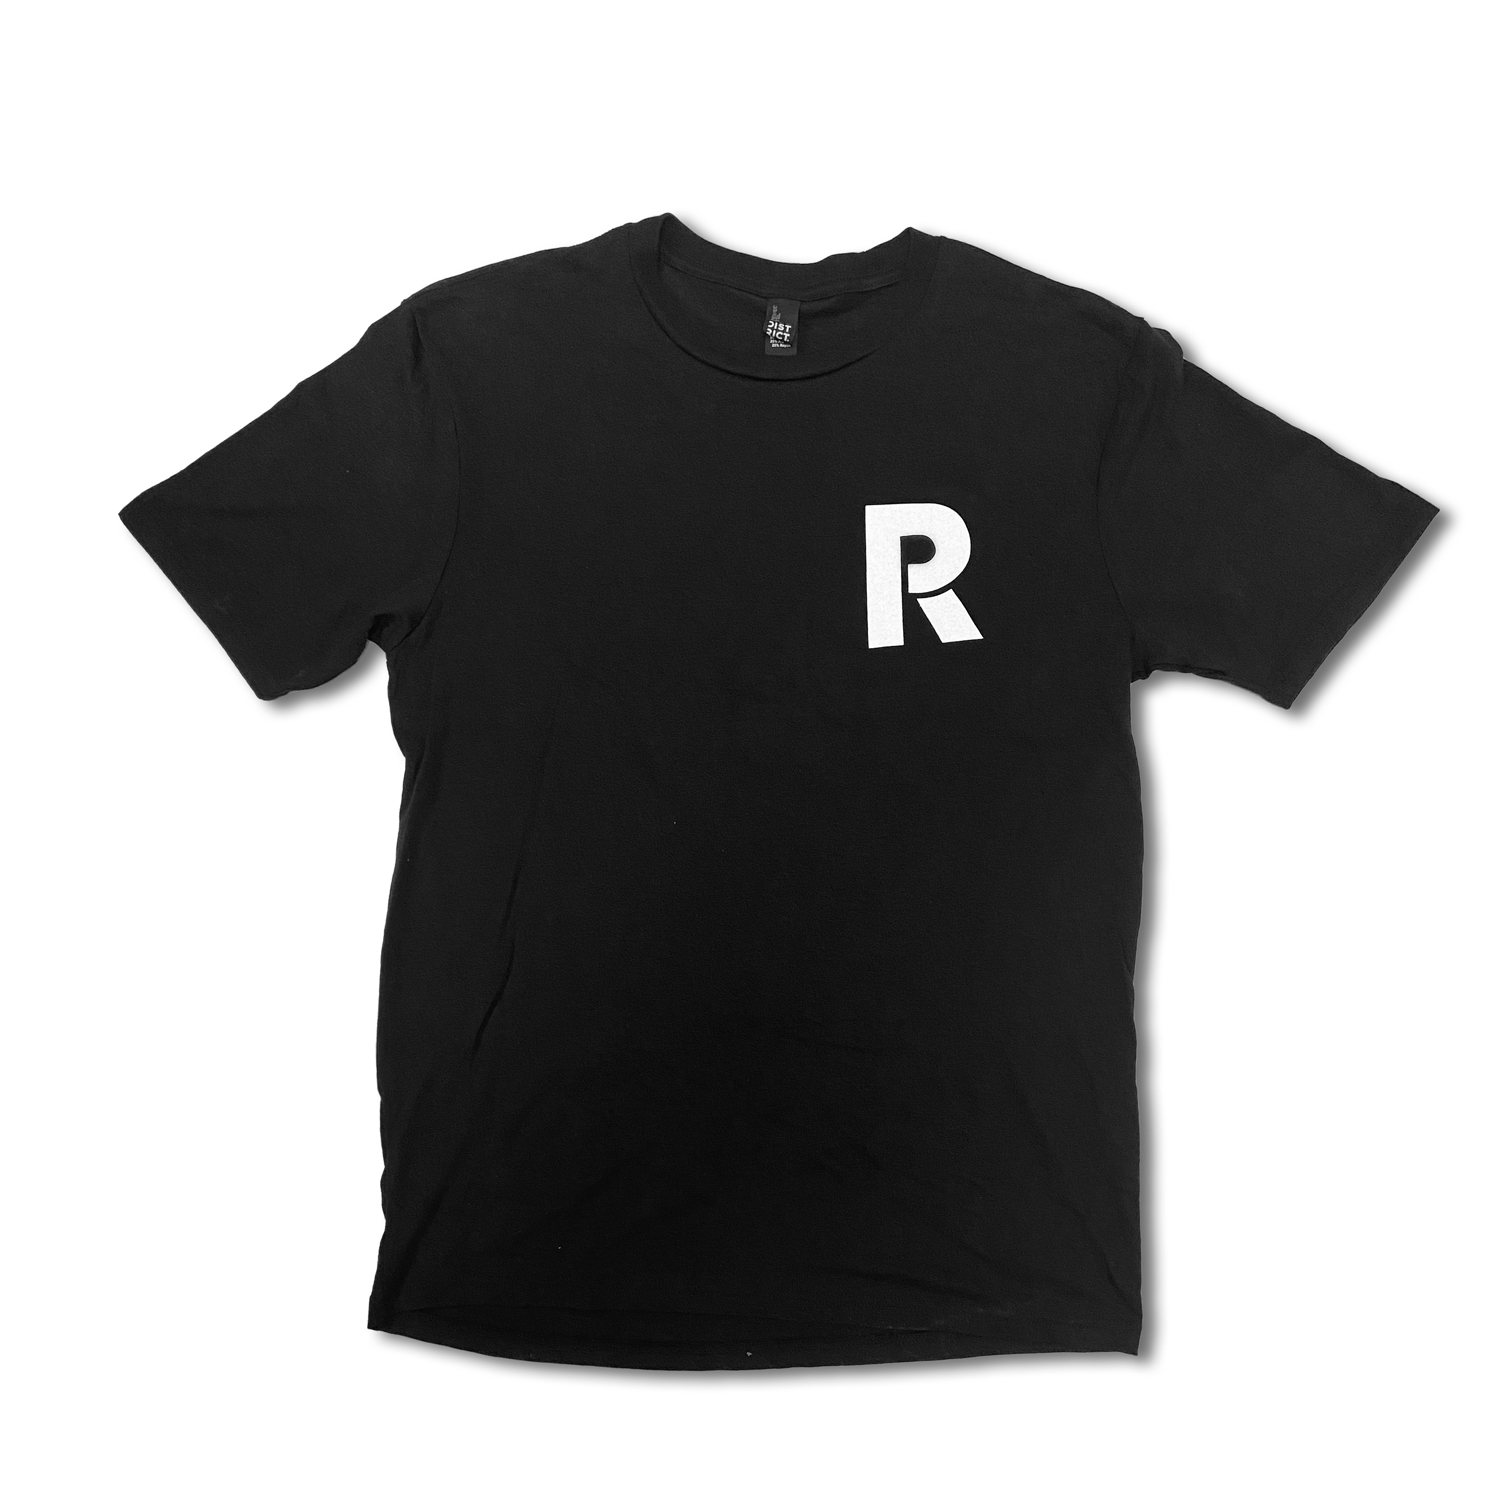 Reparadise black t-shirt